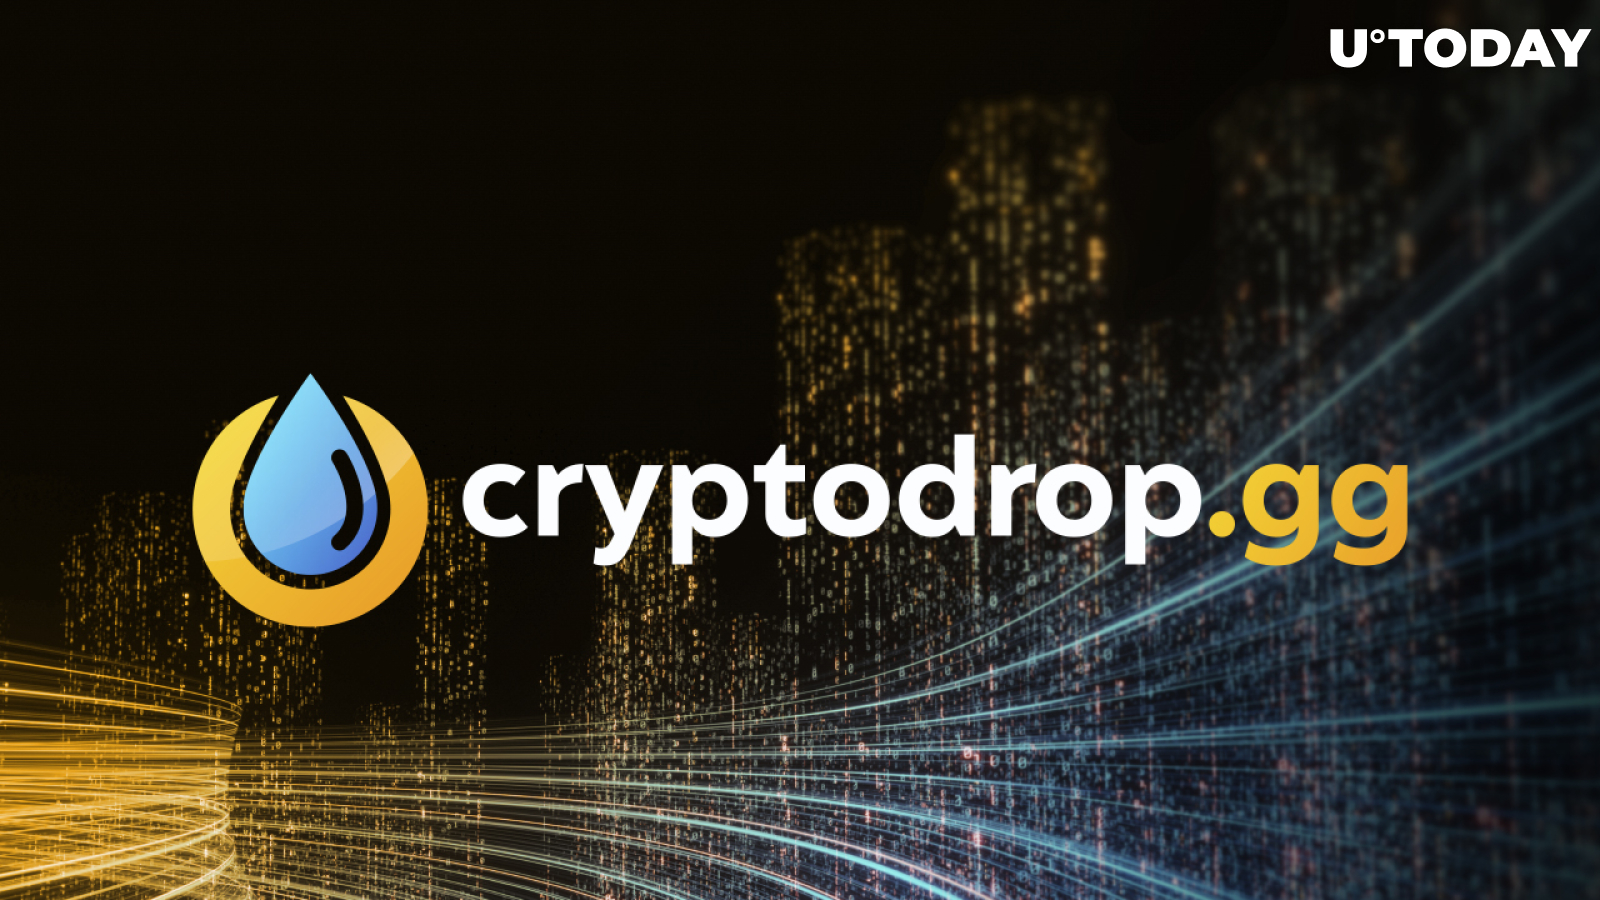 Cryptodrop Launches $CDROP Token on the Binance Smart Chain